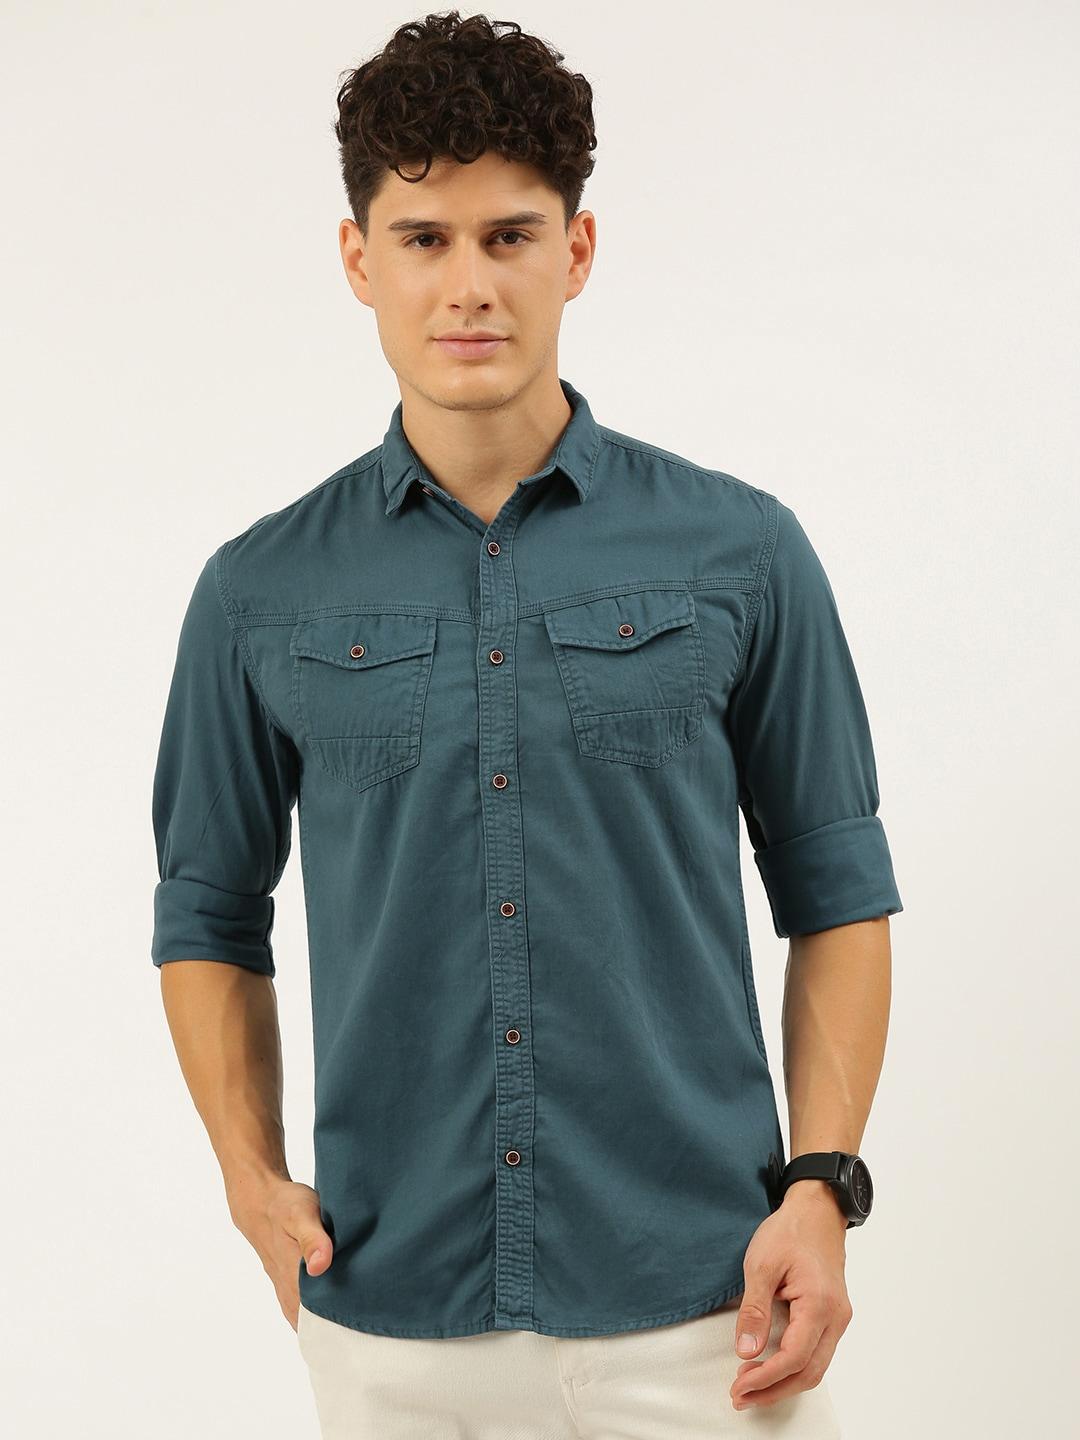 ivoc-men-teal-blue-pure-cotton-standard-slim-fit-casual-shirt